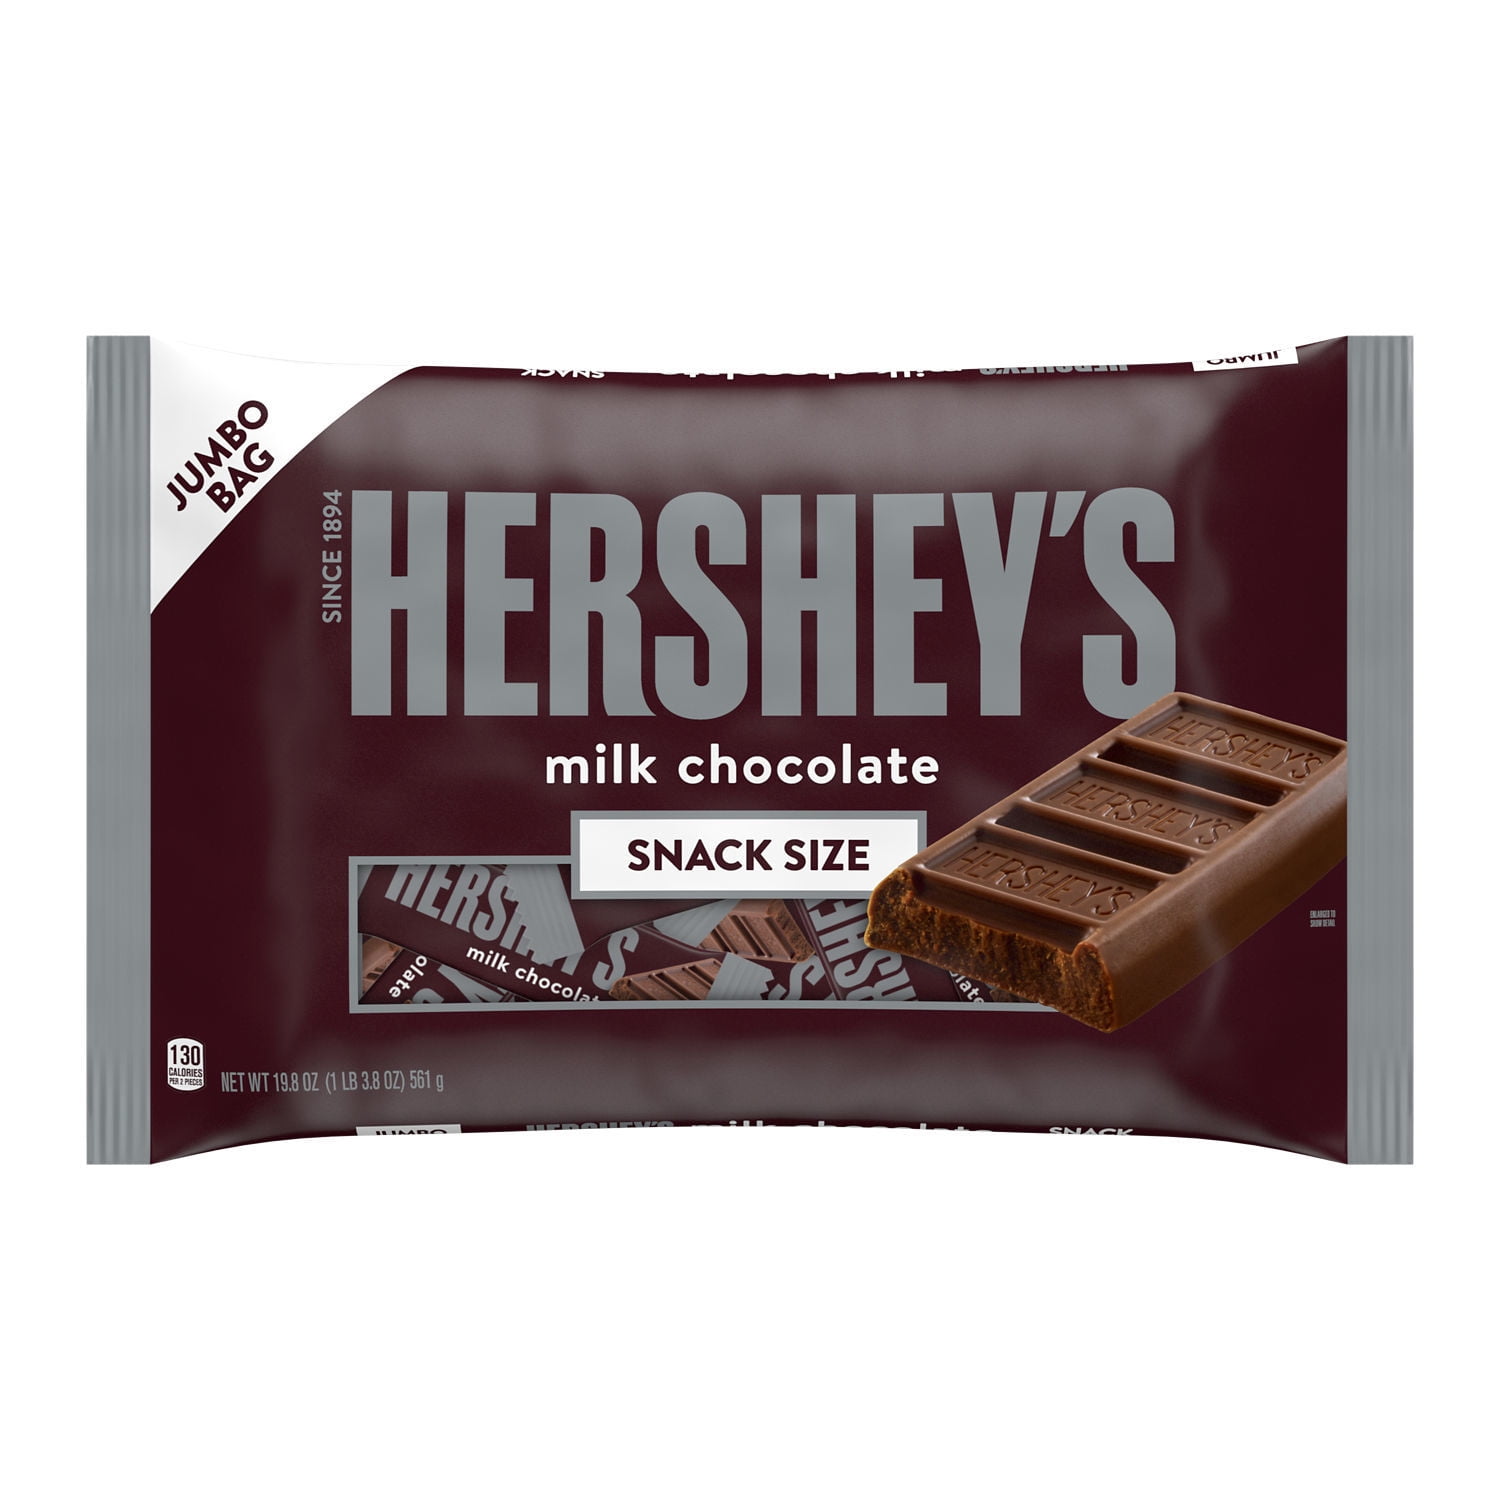 HERSHEY'S Milk Chocolate Snack Size, Easter Candy Bars Jumbo Bag, 19.8 oz